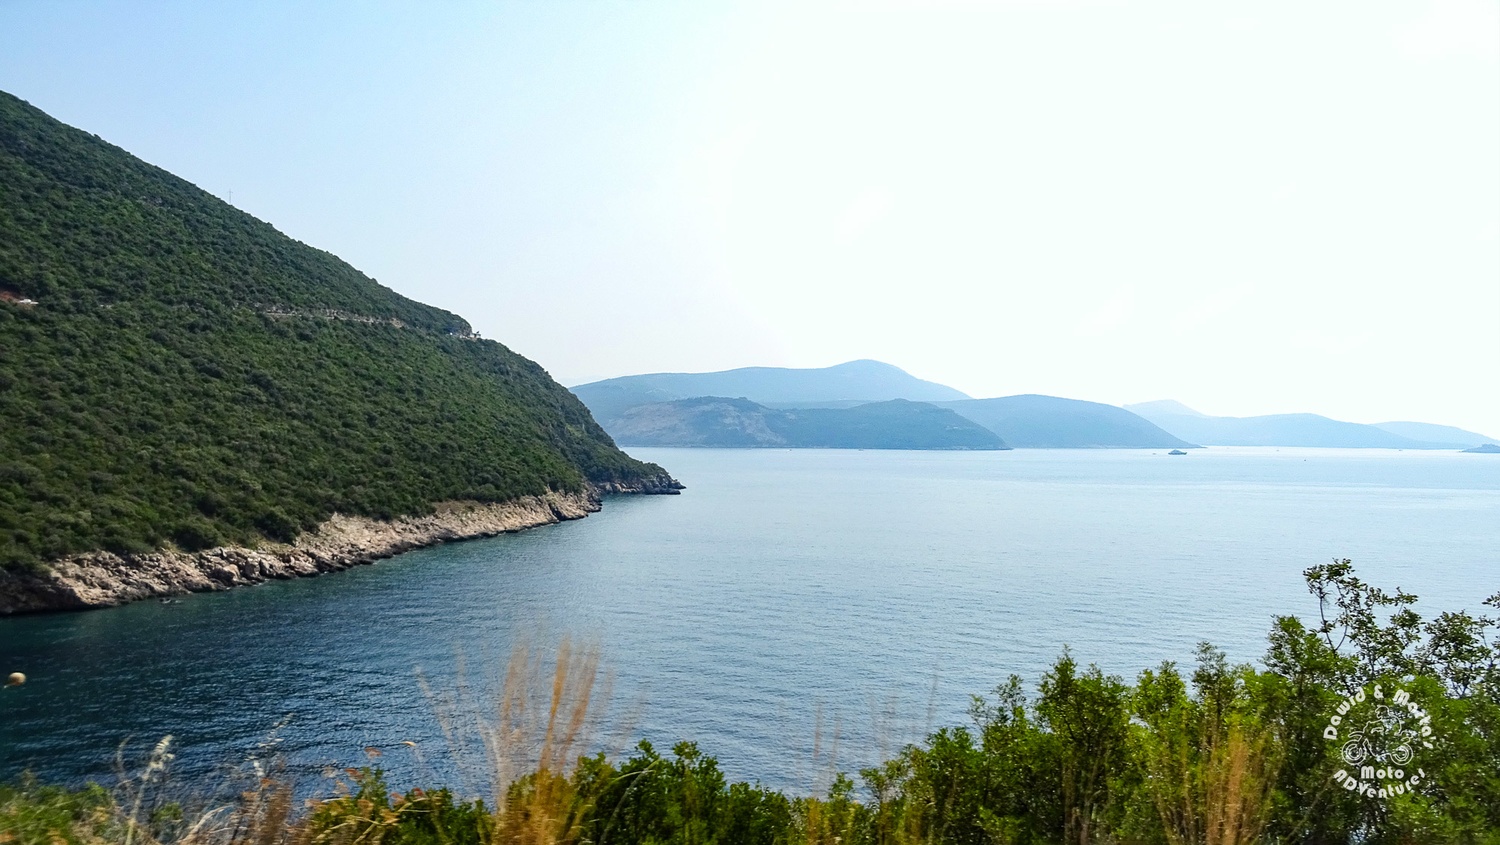 Road from Prevlaka exit to Montenegro border along the Adriatic Sea coastline